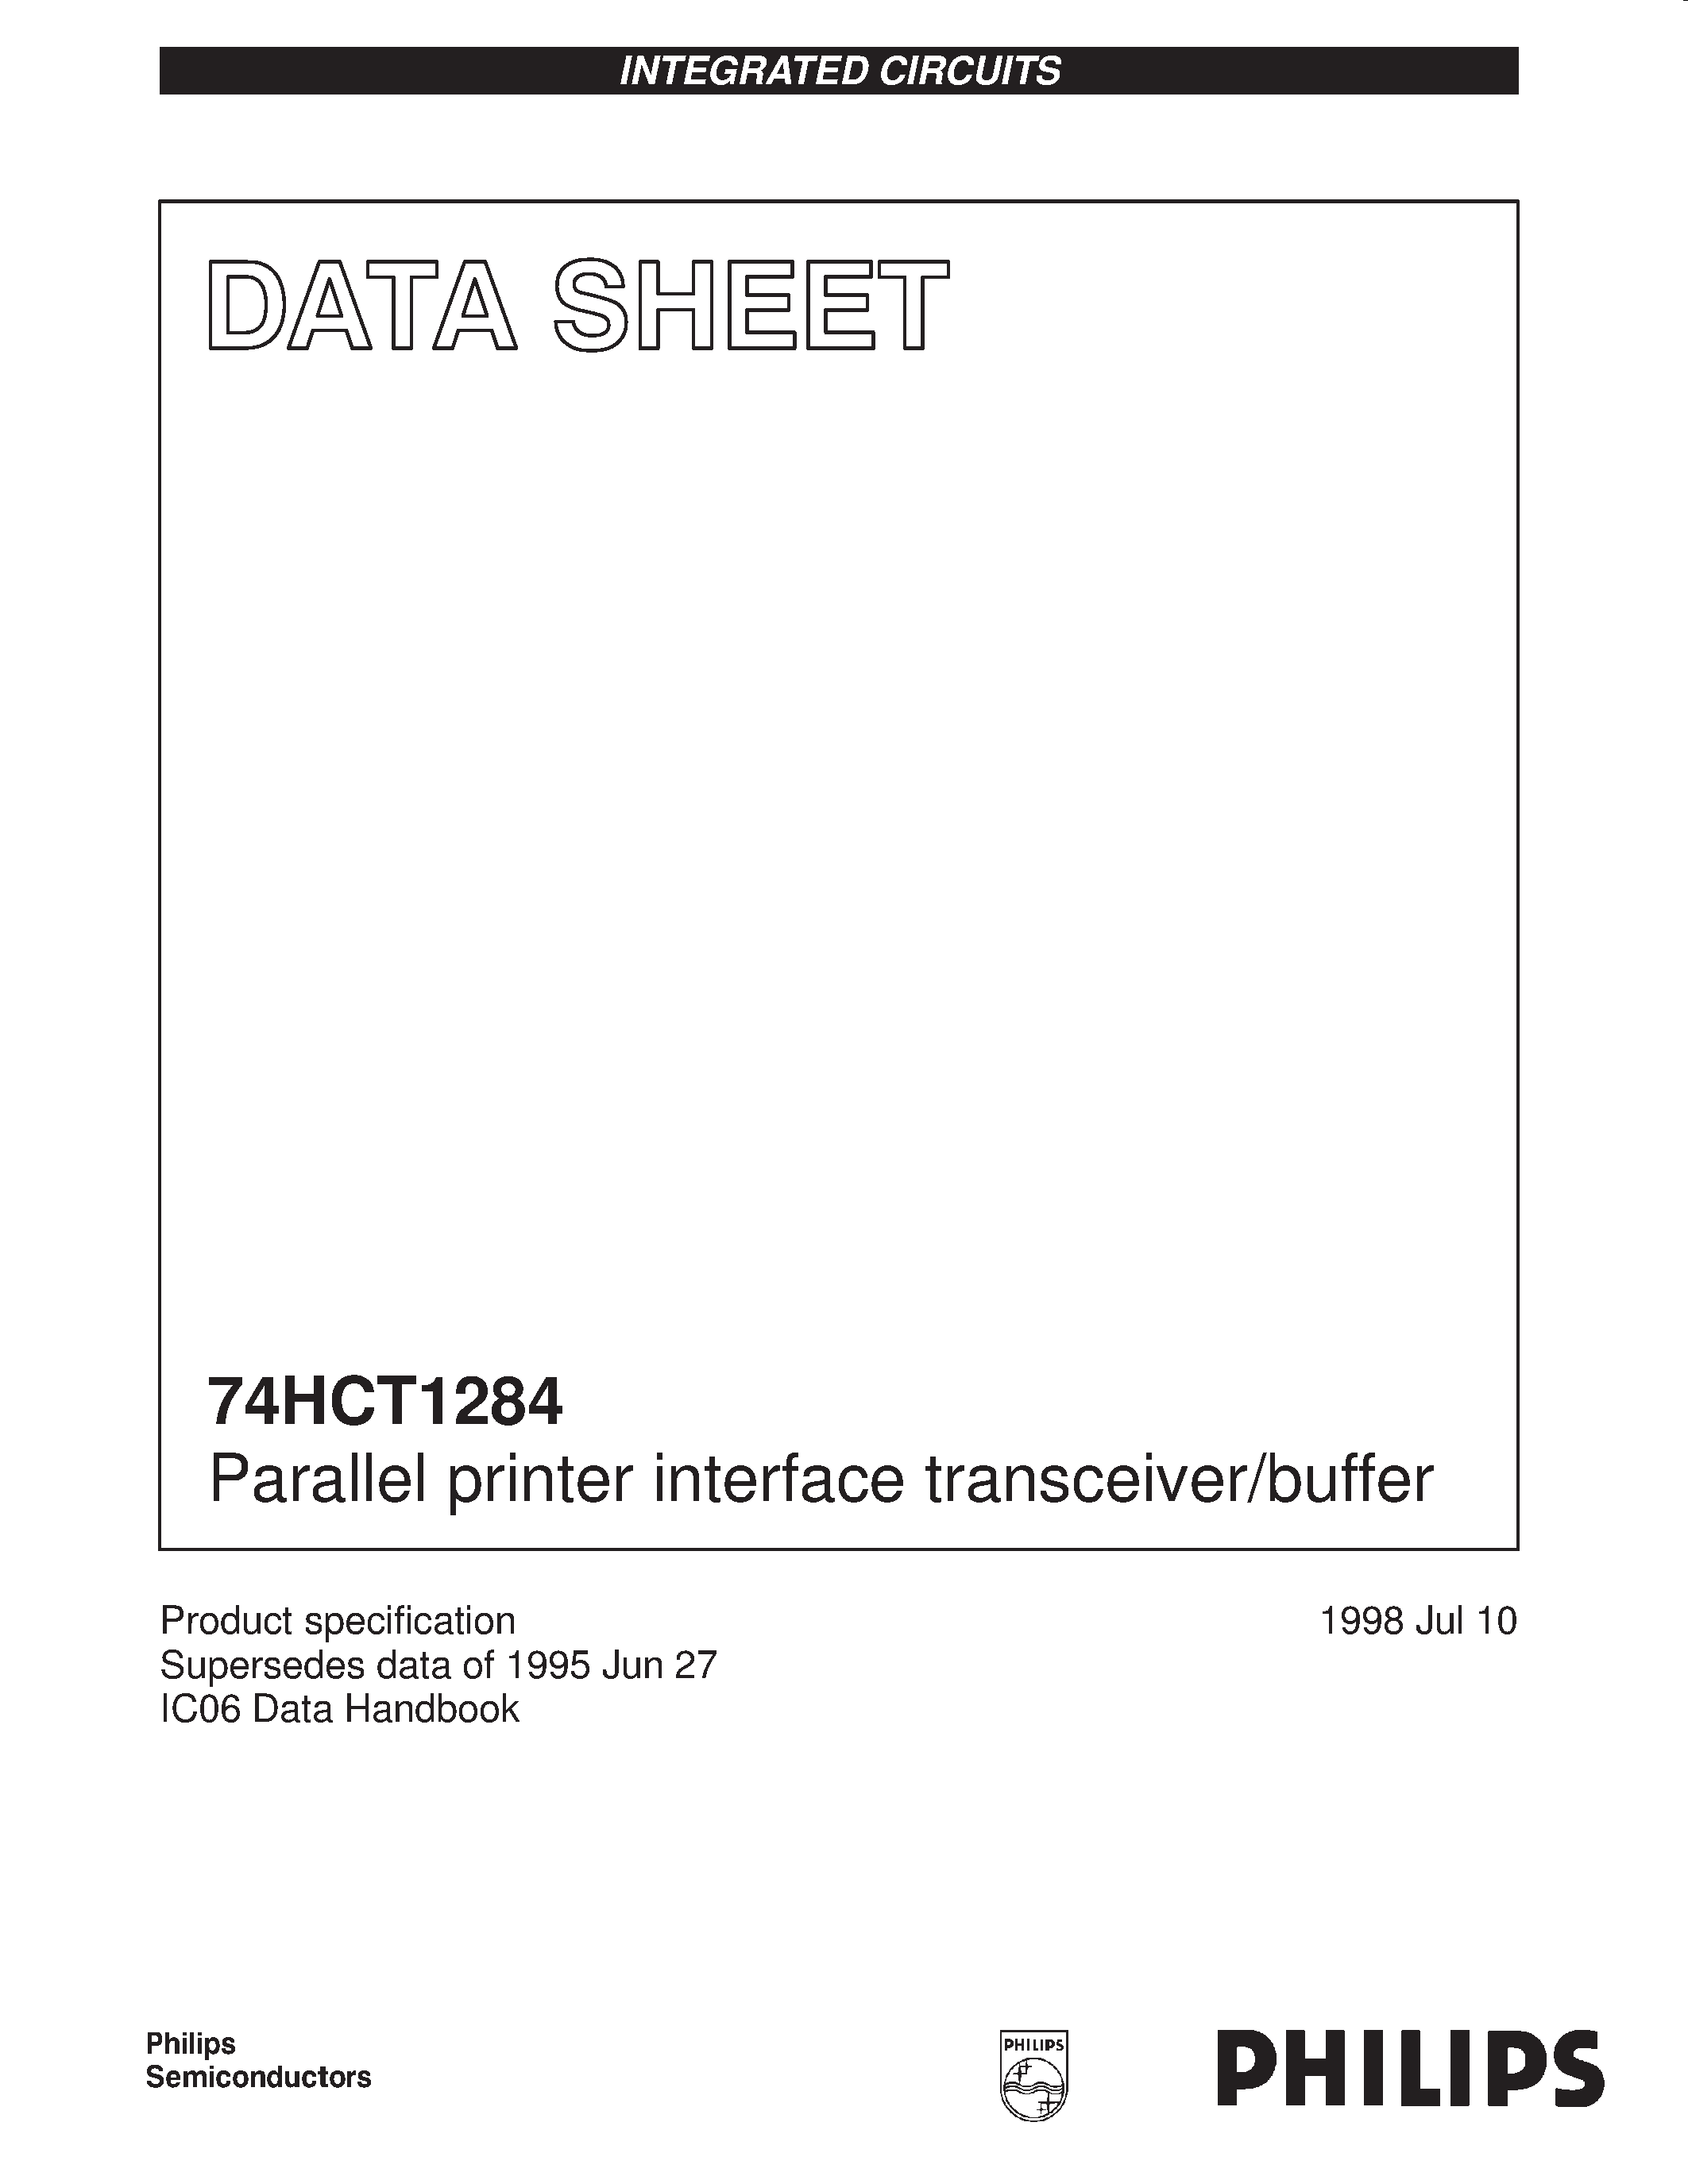 Datasheet 74HCT1284 - Parallel printer interface transceiver/buffer page 1